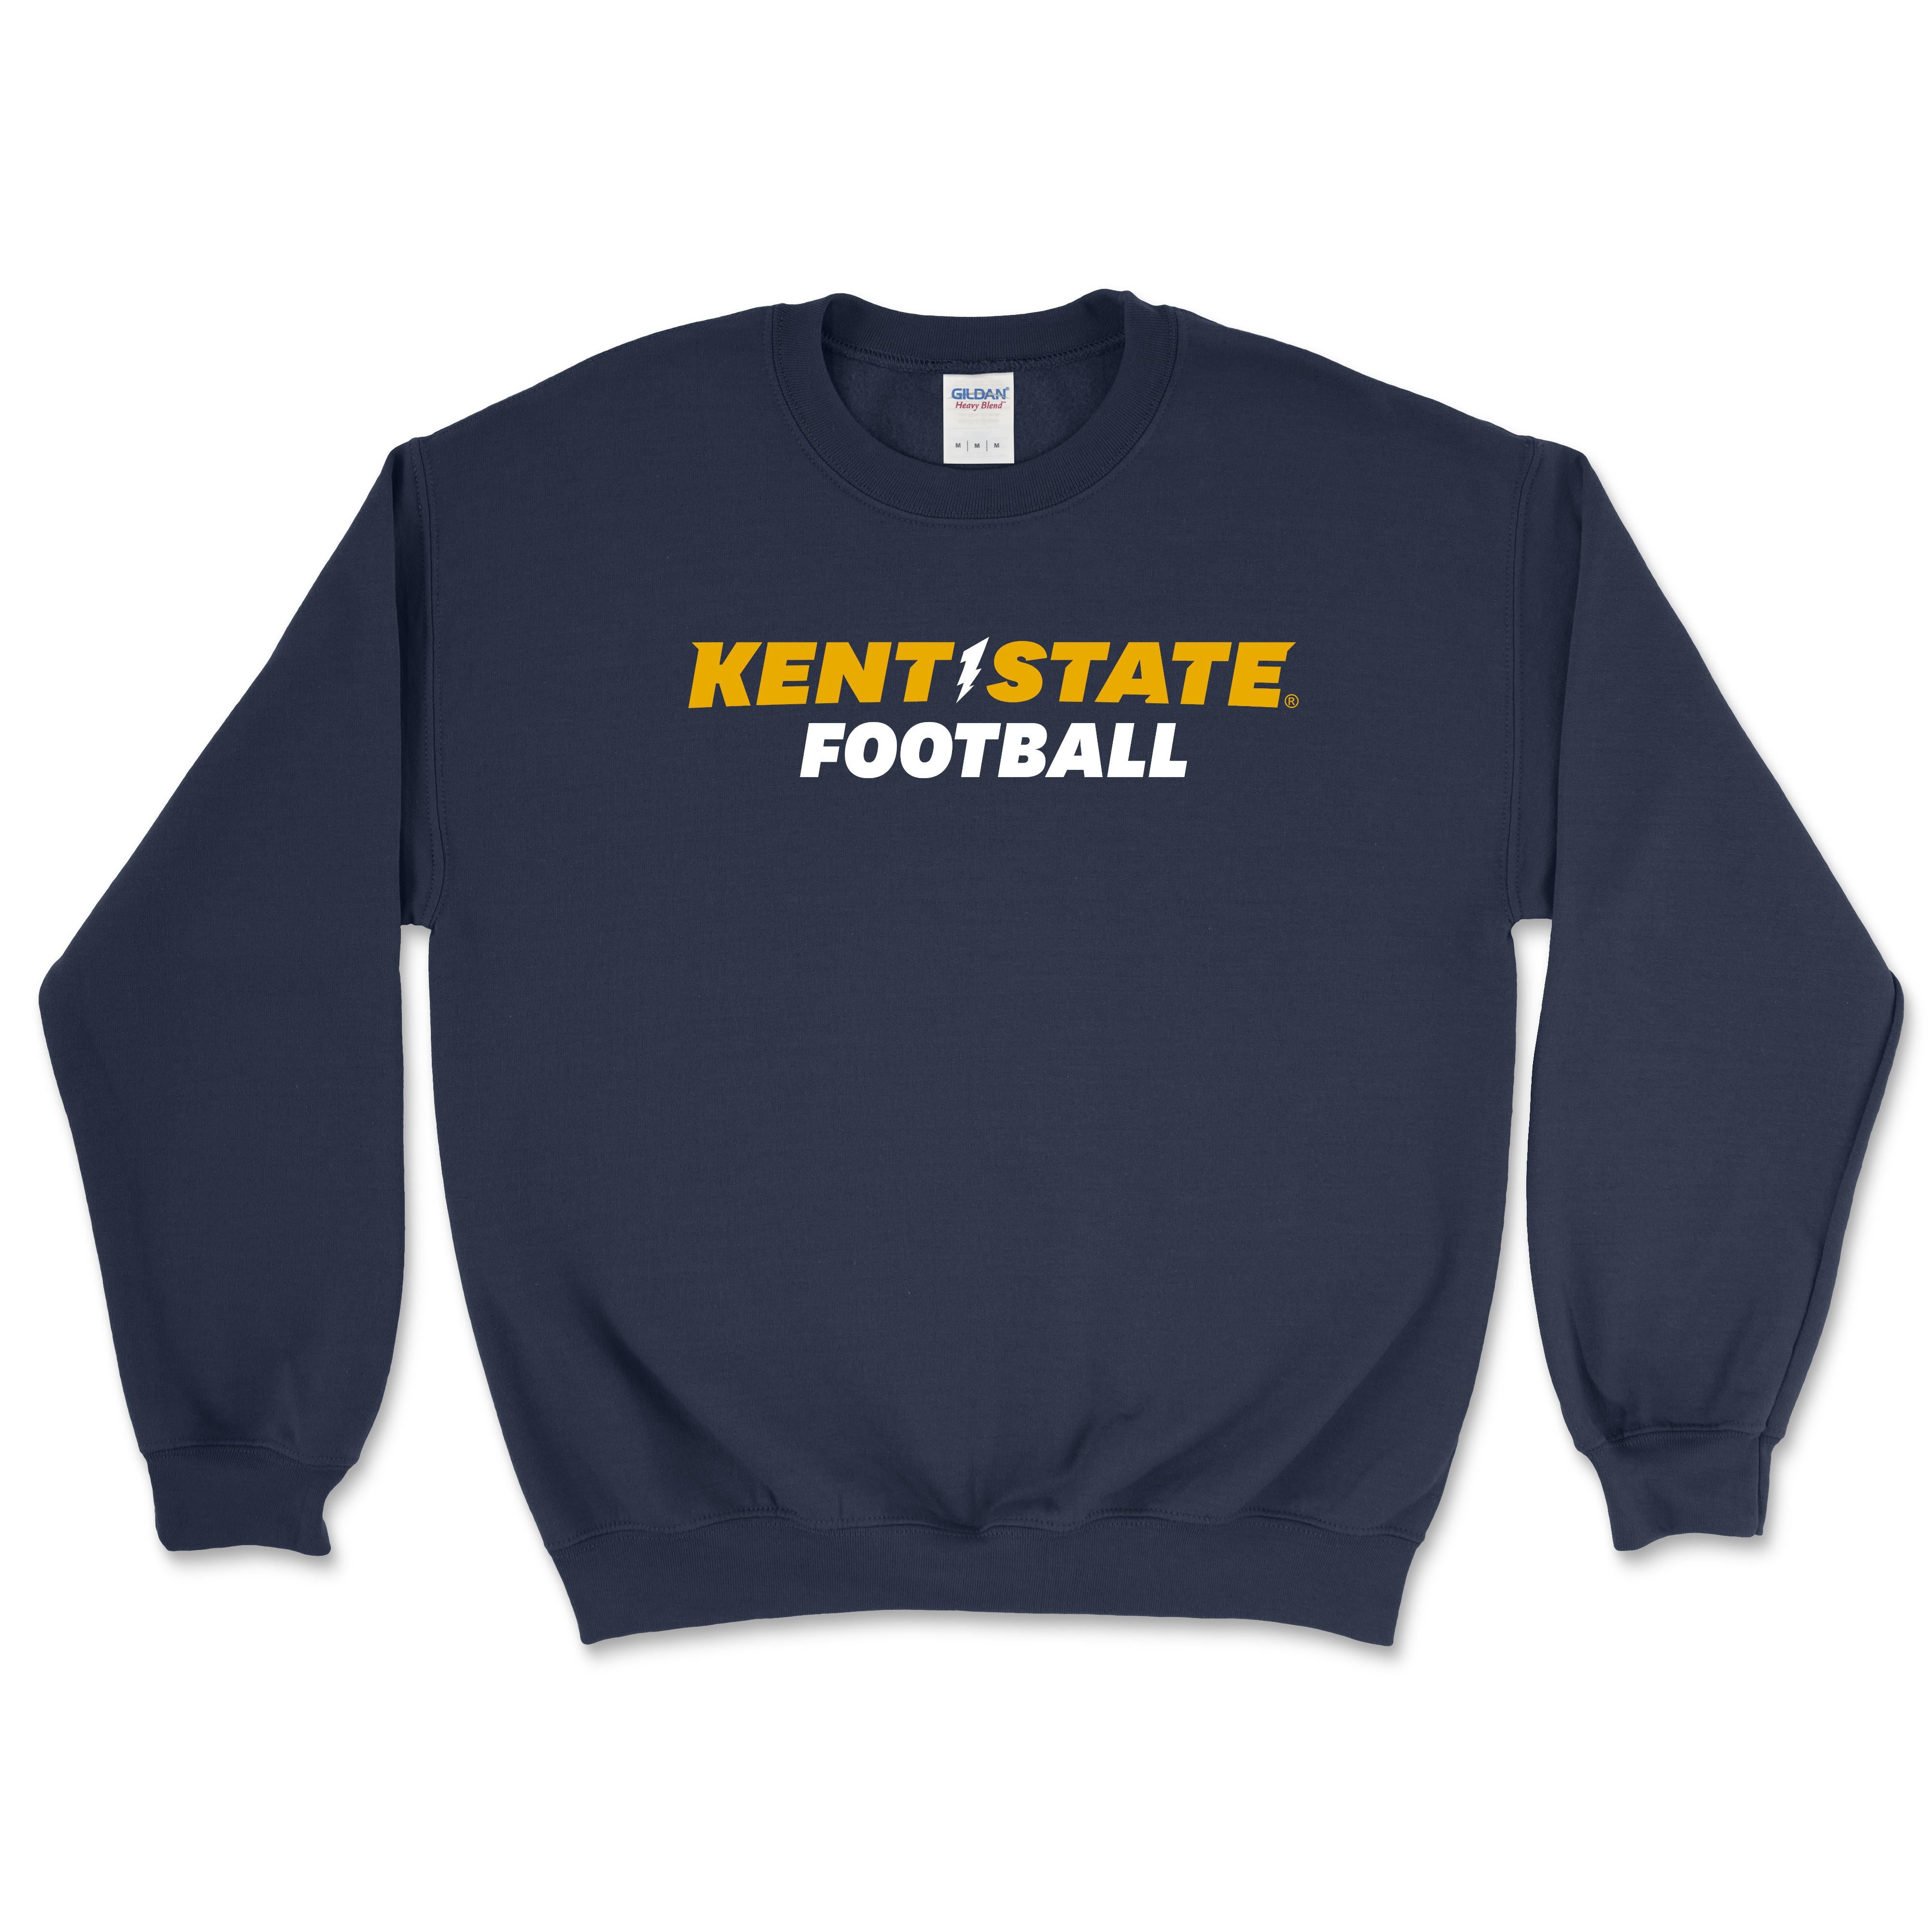 Kent State Navy Football Crewneck Sweatshirt